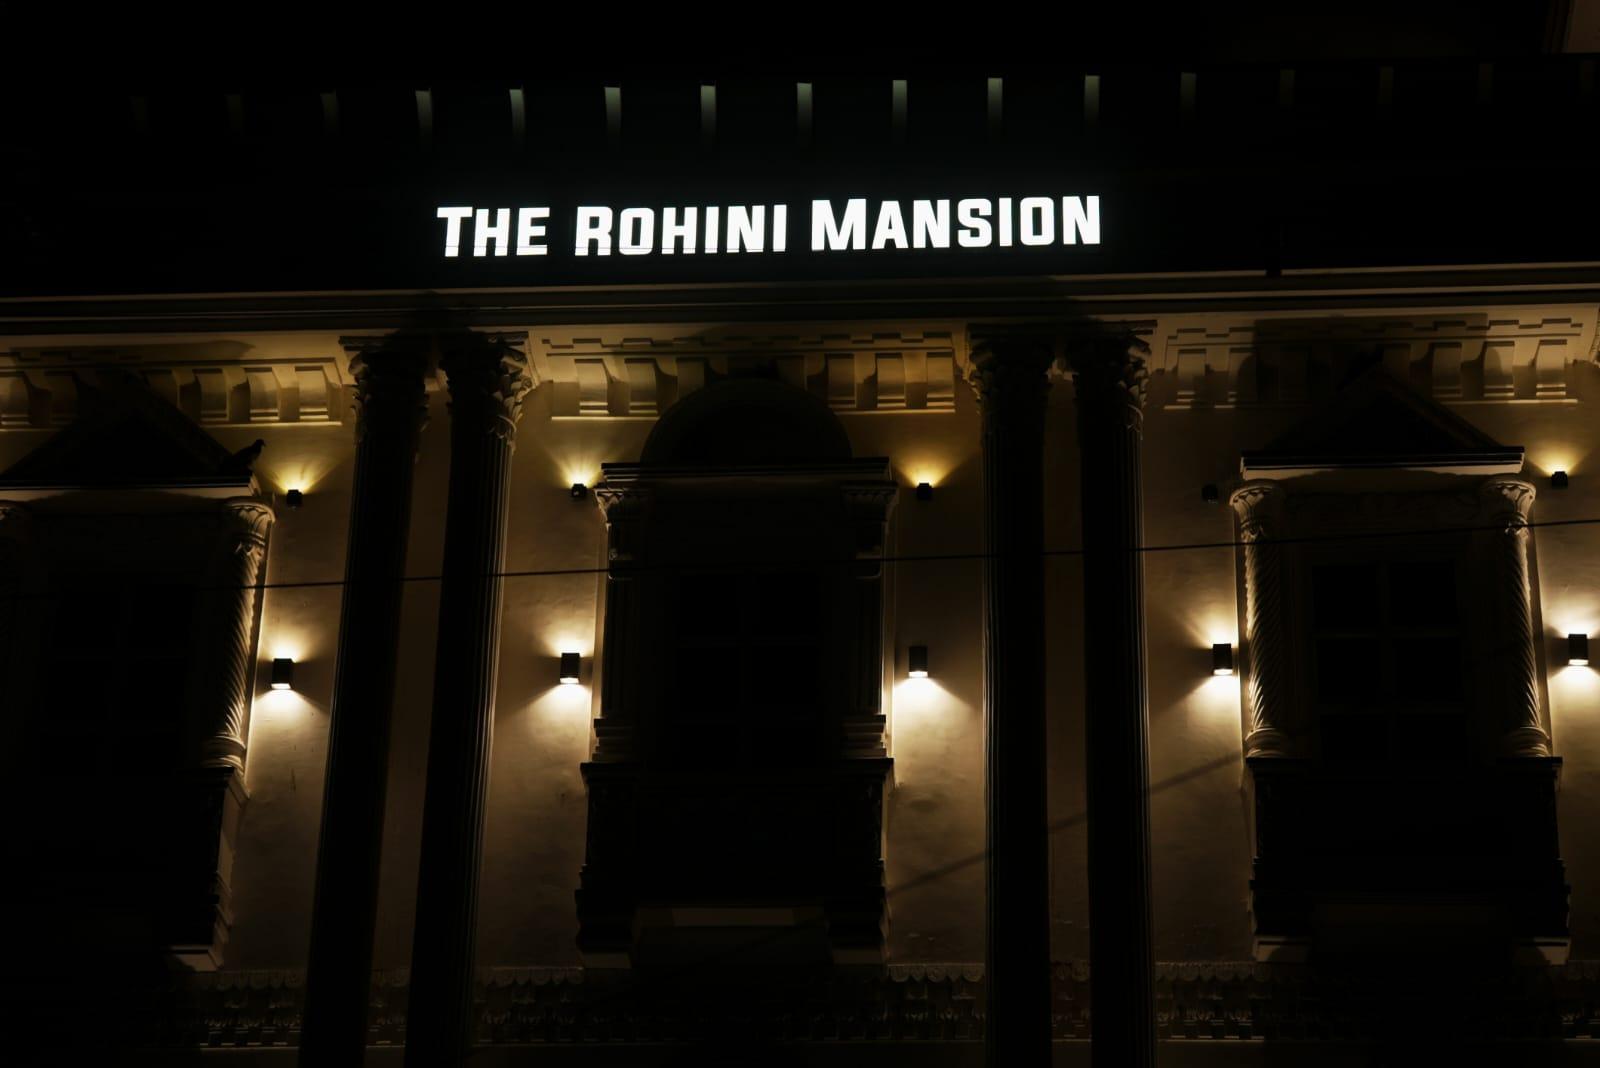 The Rohini Mansion By The Monsoon And Pearl Palace - Yamuna Nagar